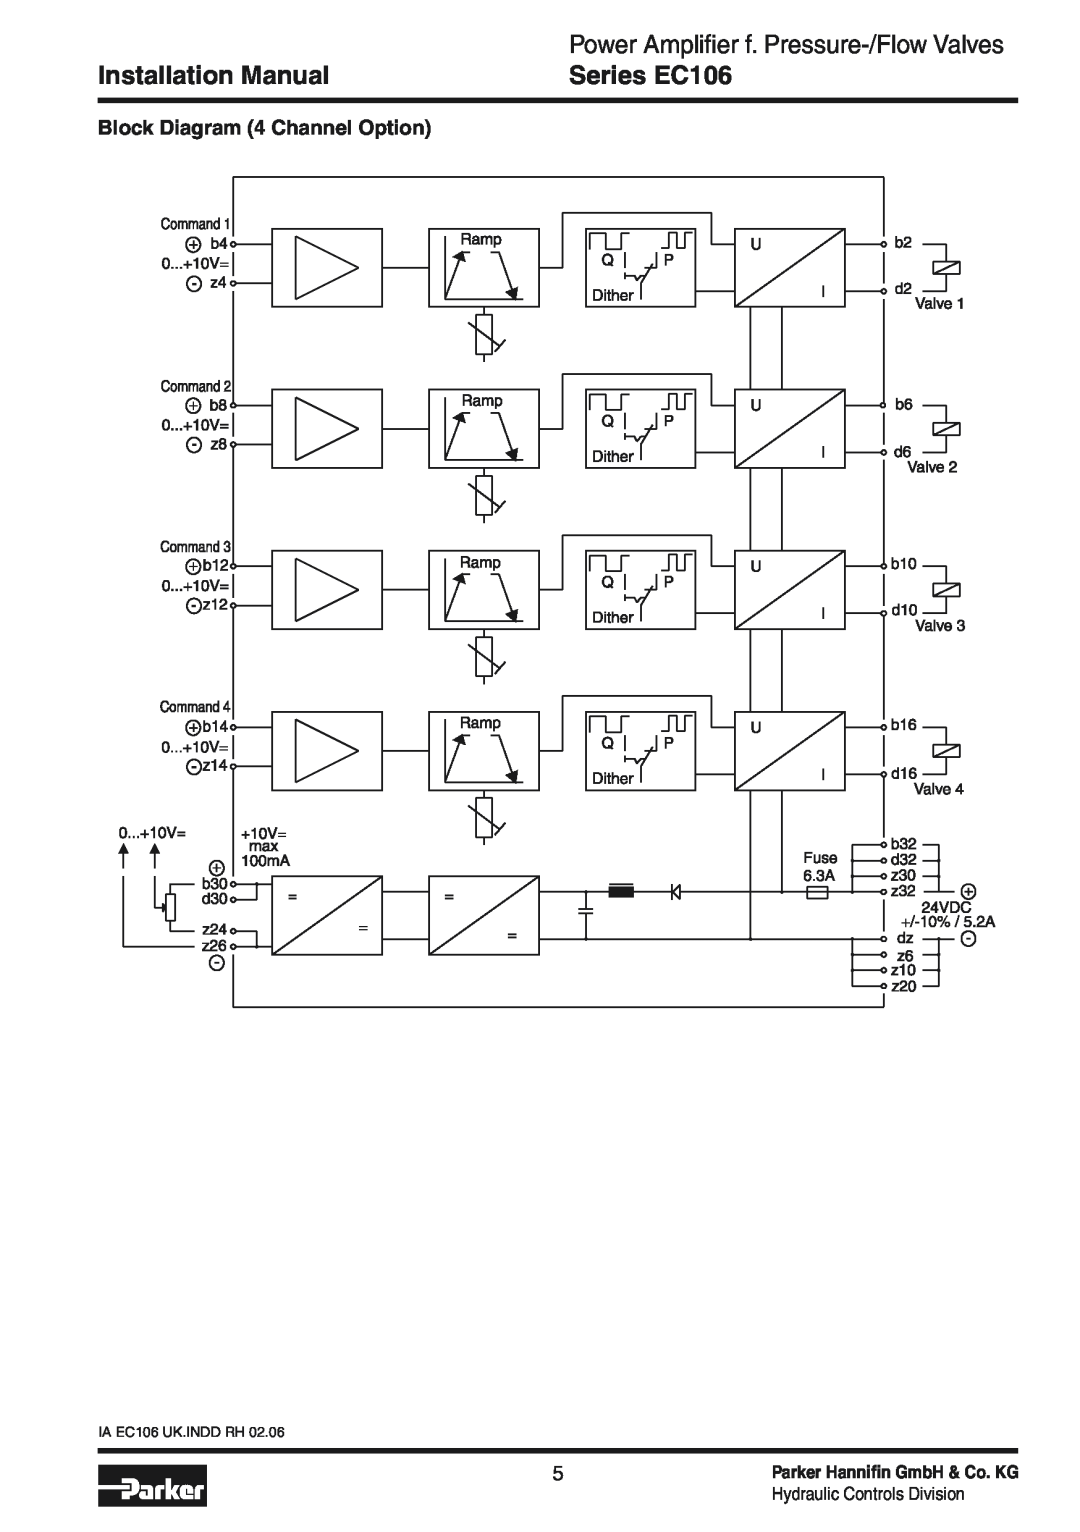 Parker Hannifin Block Diagram 4 Channel Option, Installation Manual, Series EC106, IA EC106 UK.INDD RH 